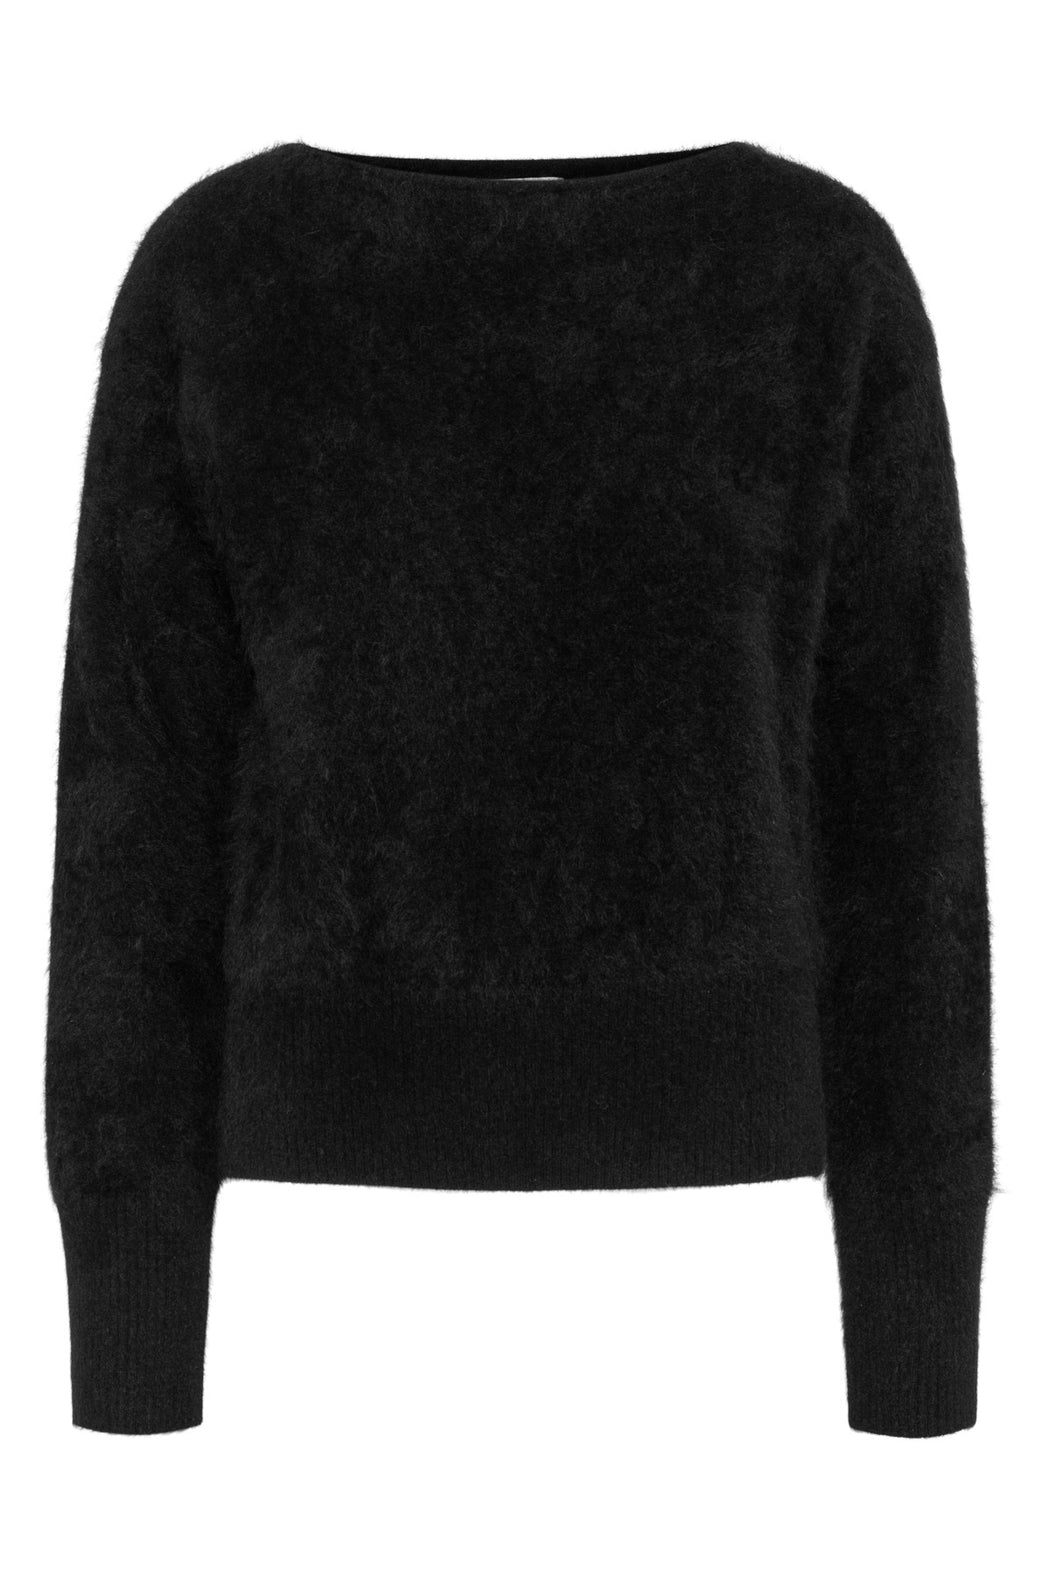 Envelope1976 Cloud knit, Black Sweater Black